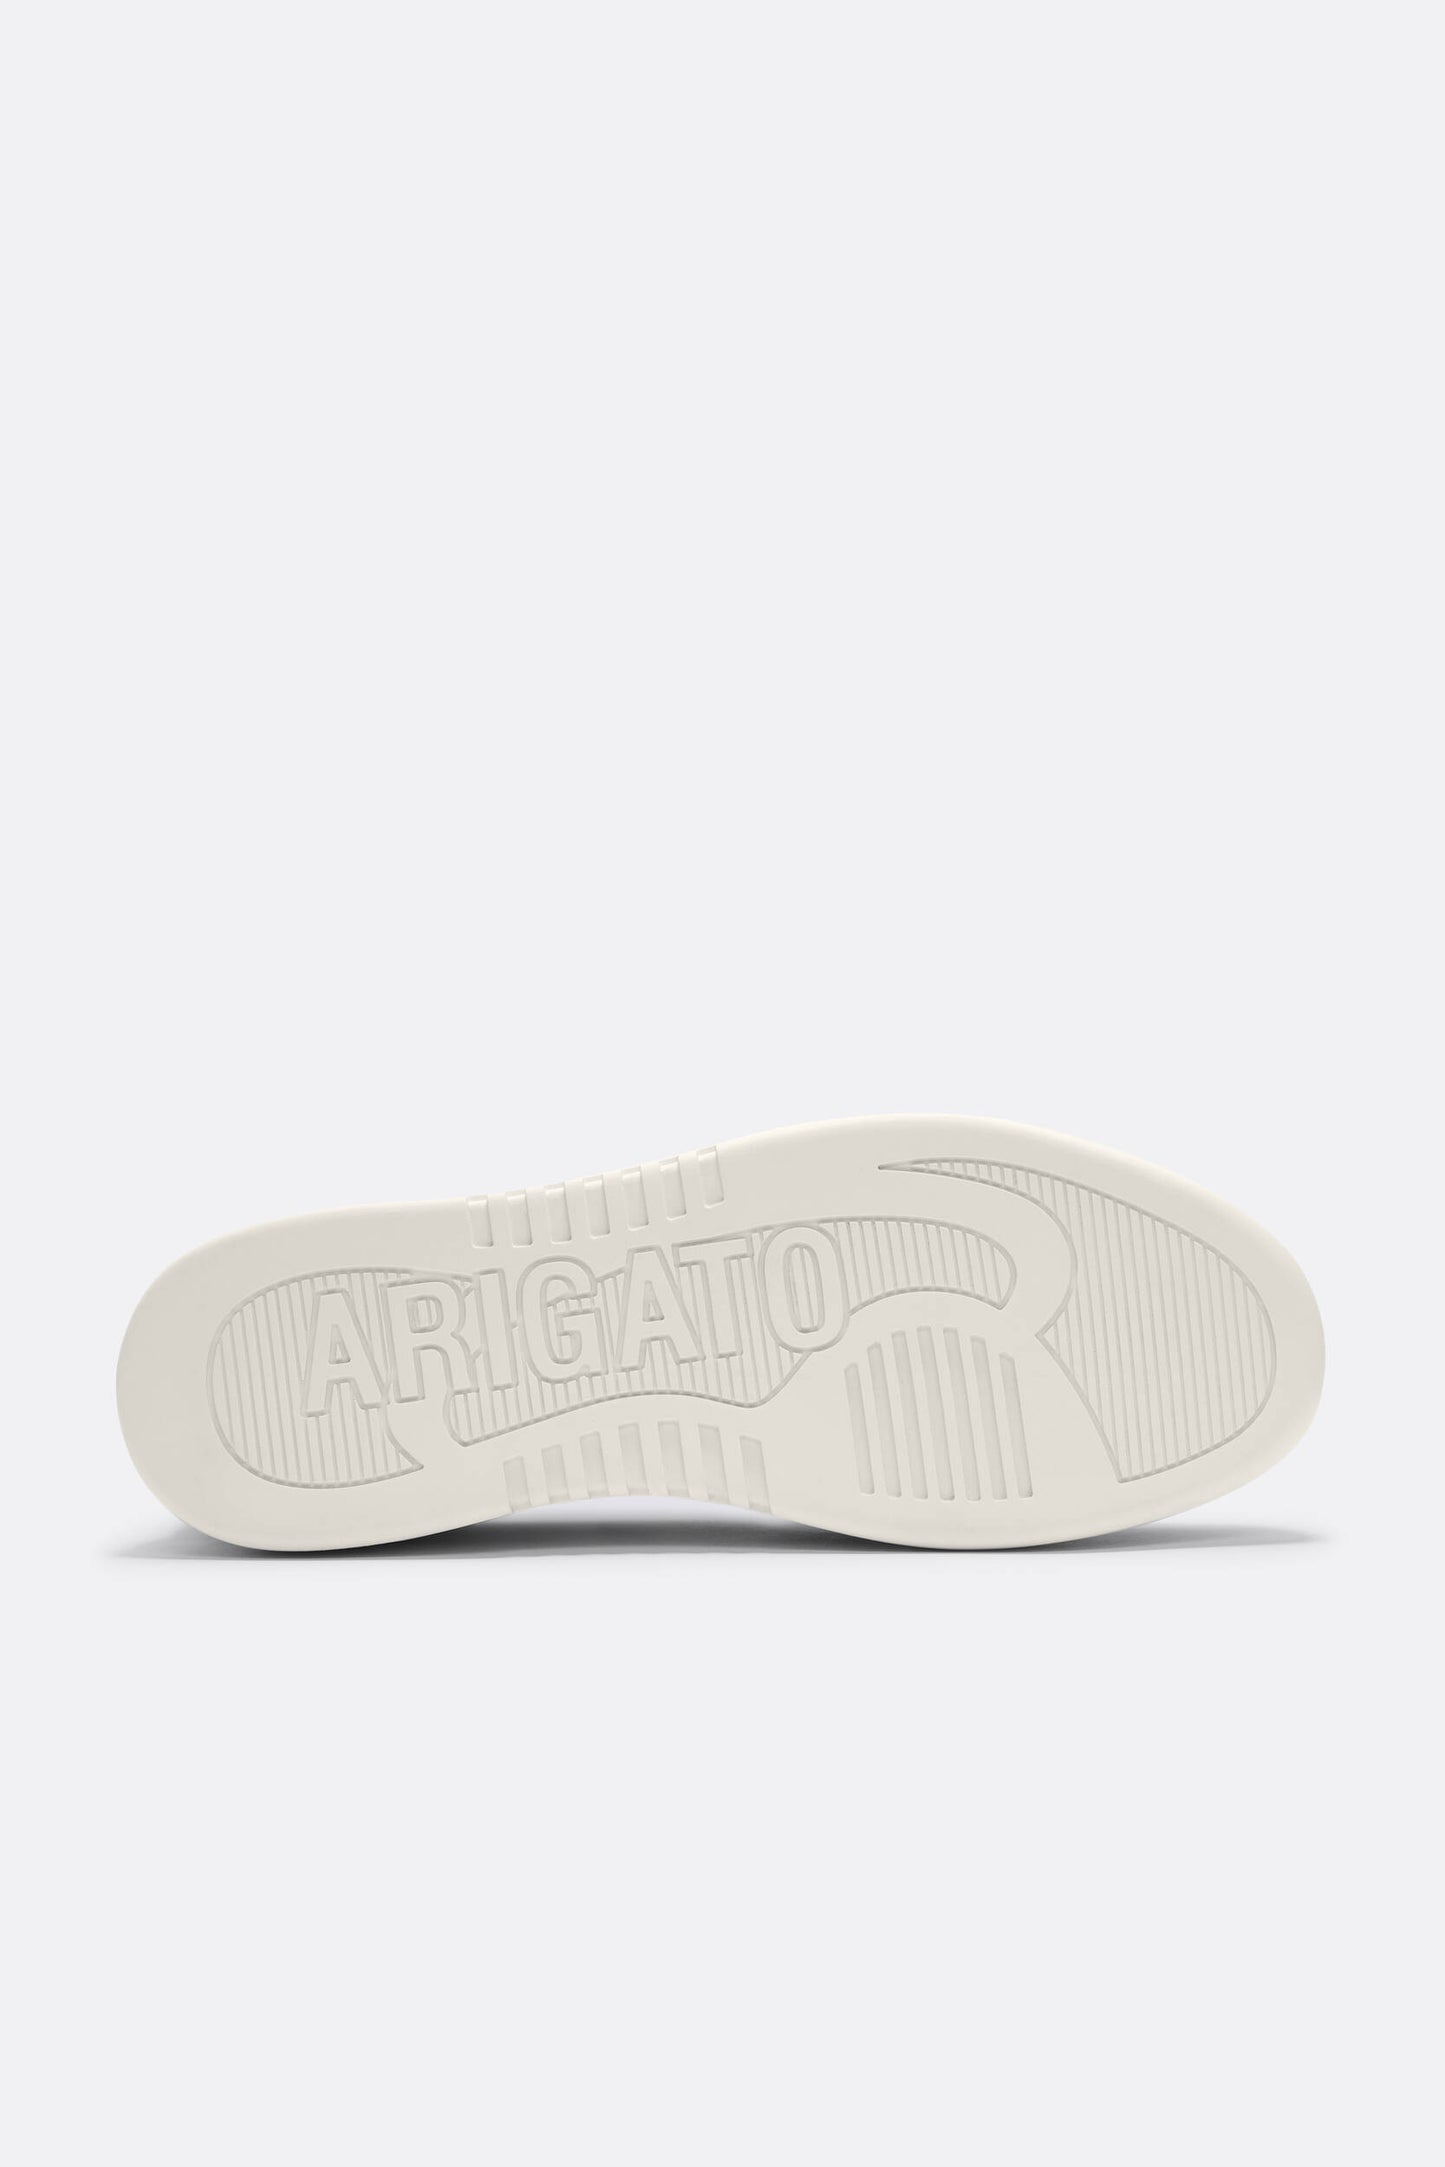 Axel Arigato Sneaker Dice Lo